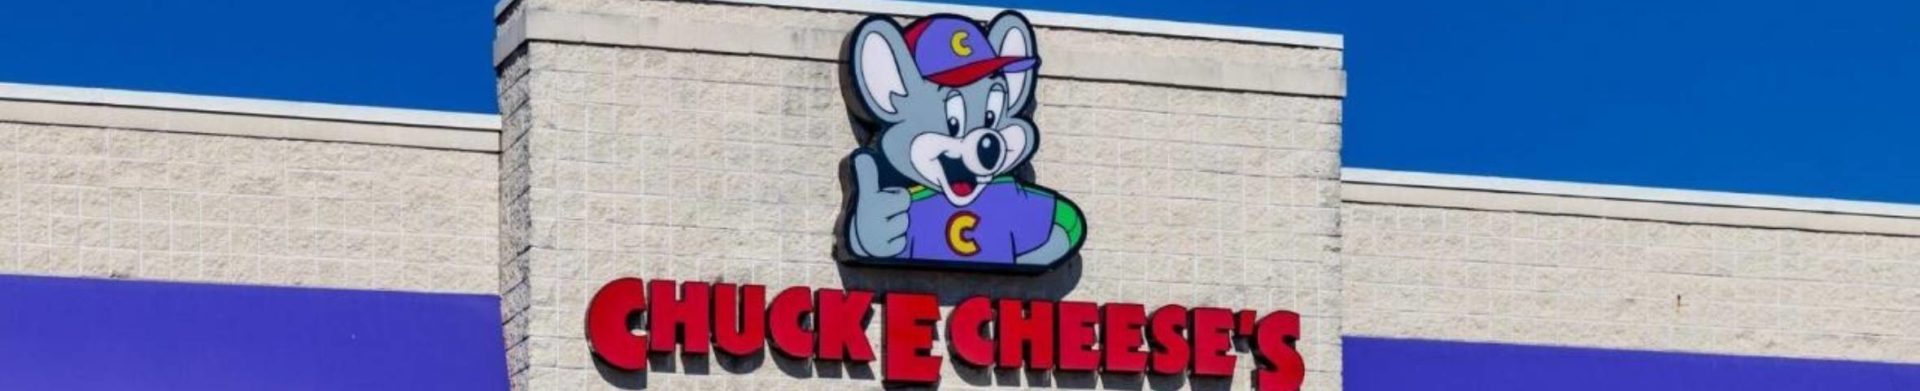 the Chuck E Cheese logo on a restaurant